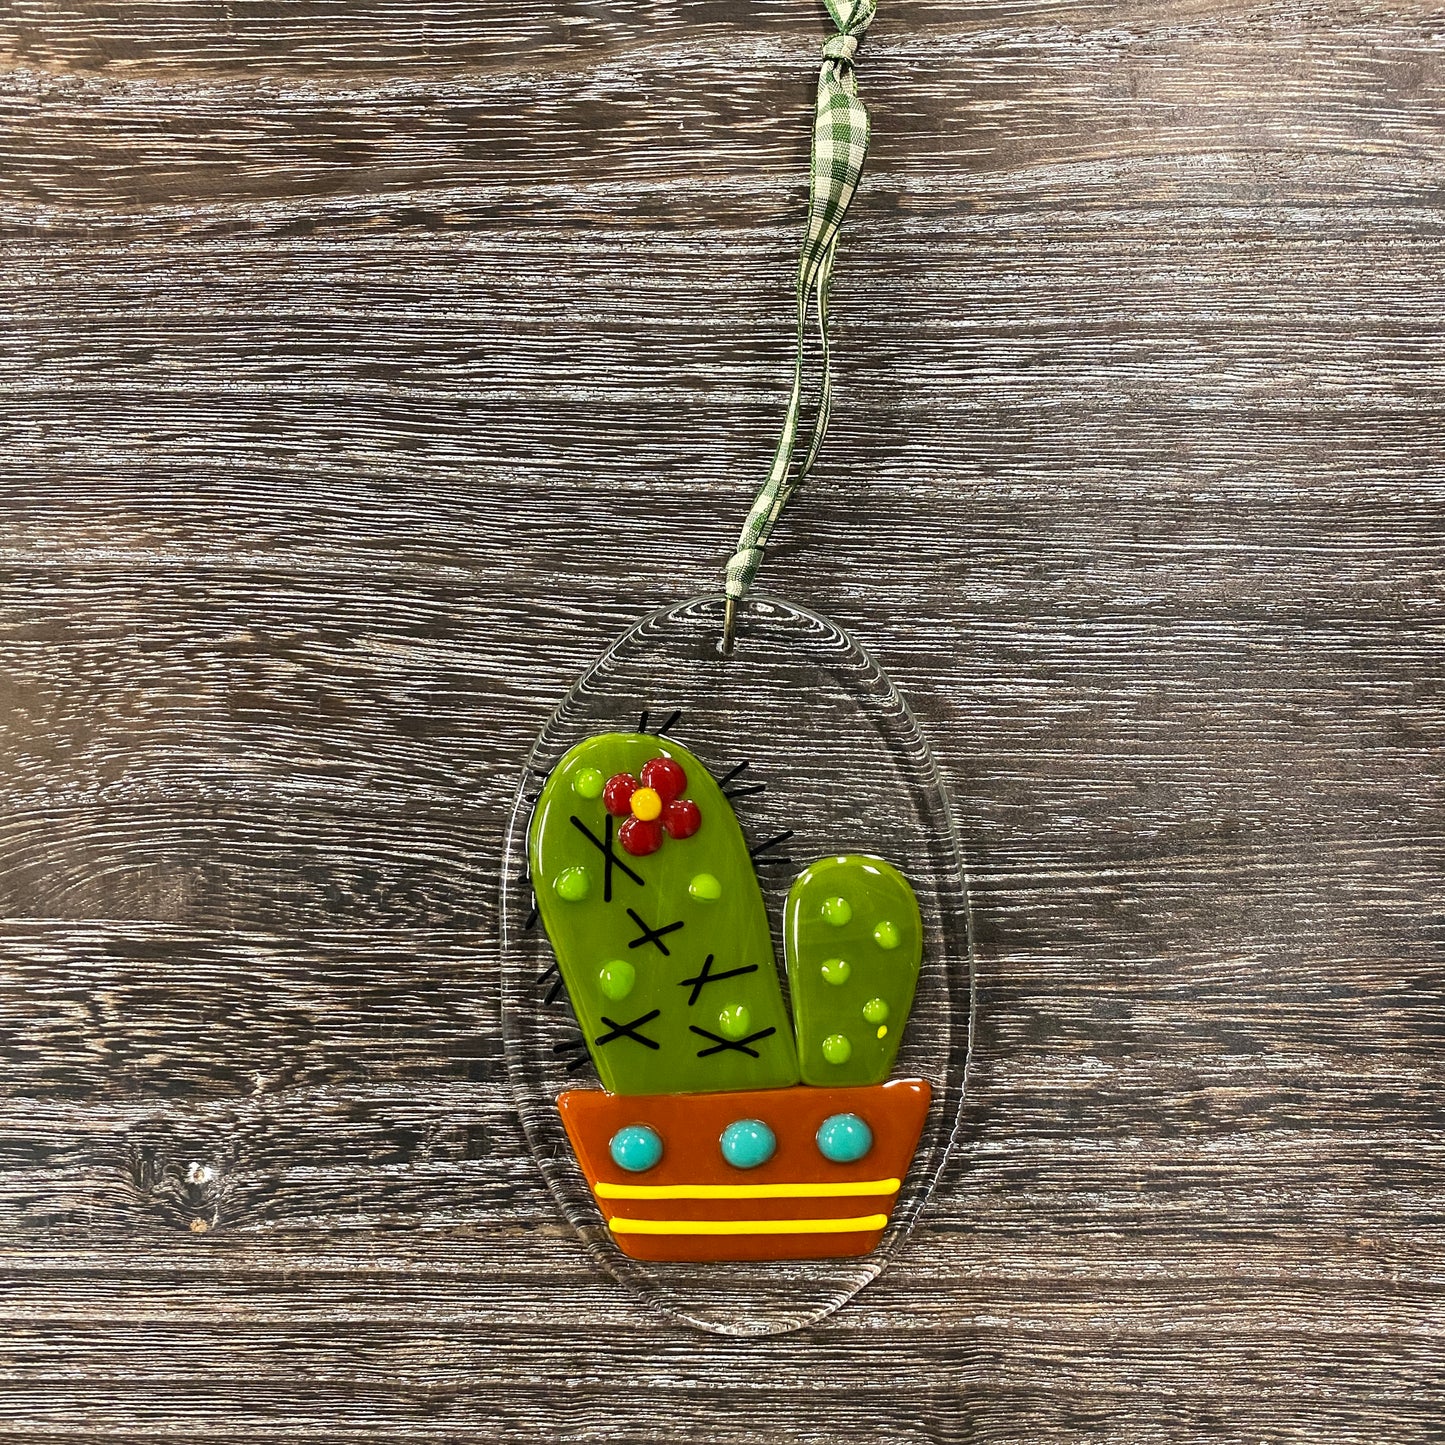 Fused Glass Suncatcher Ornament - Cactus in Pot